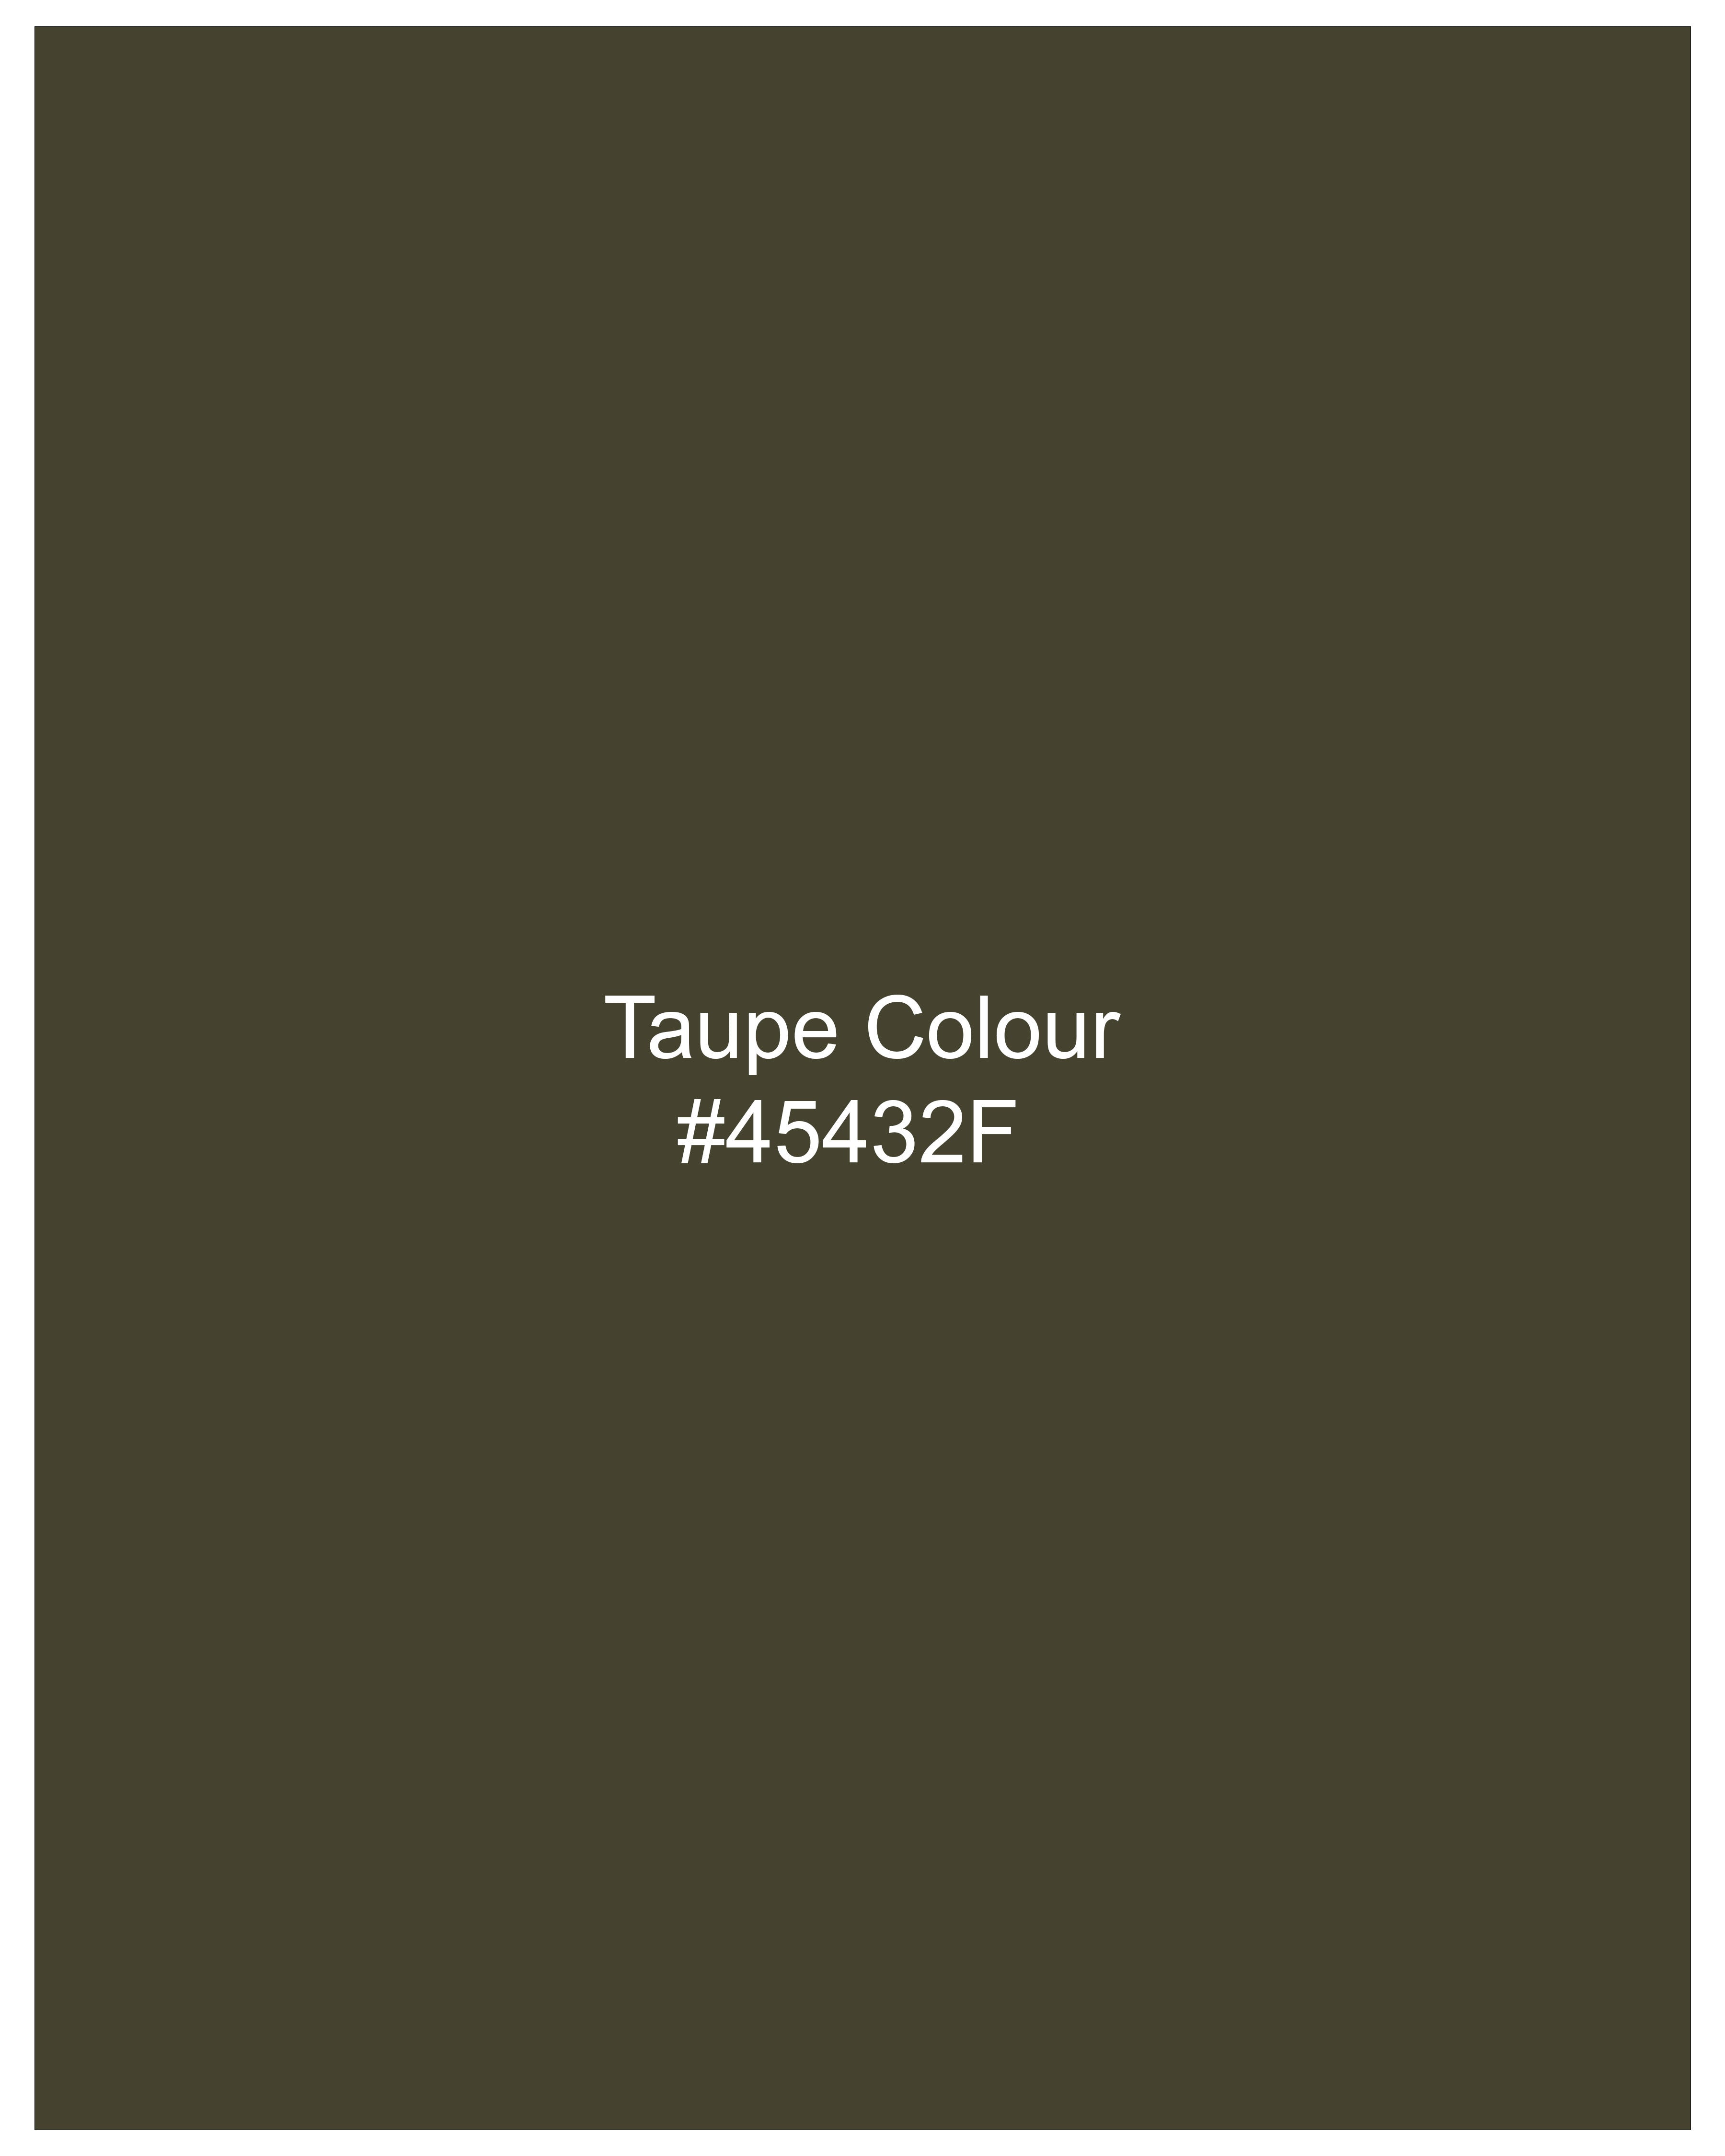 Taupe Green Solid Stretchable Premium Cotton Bandhgala traveler Blazer